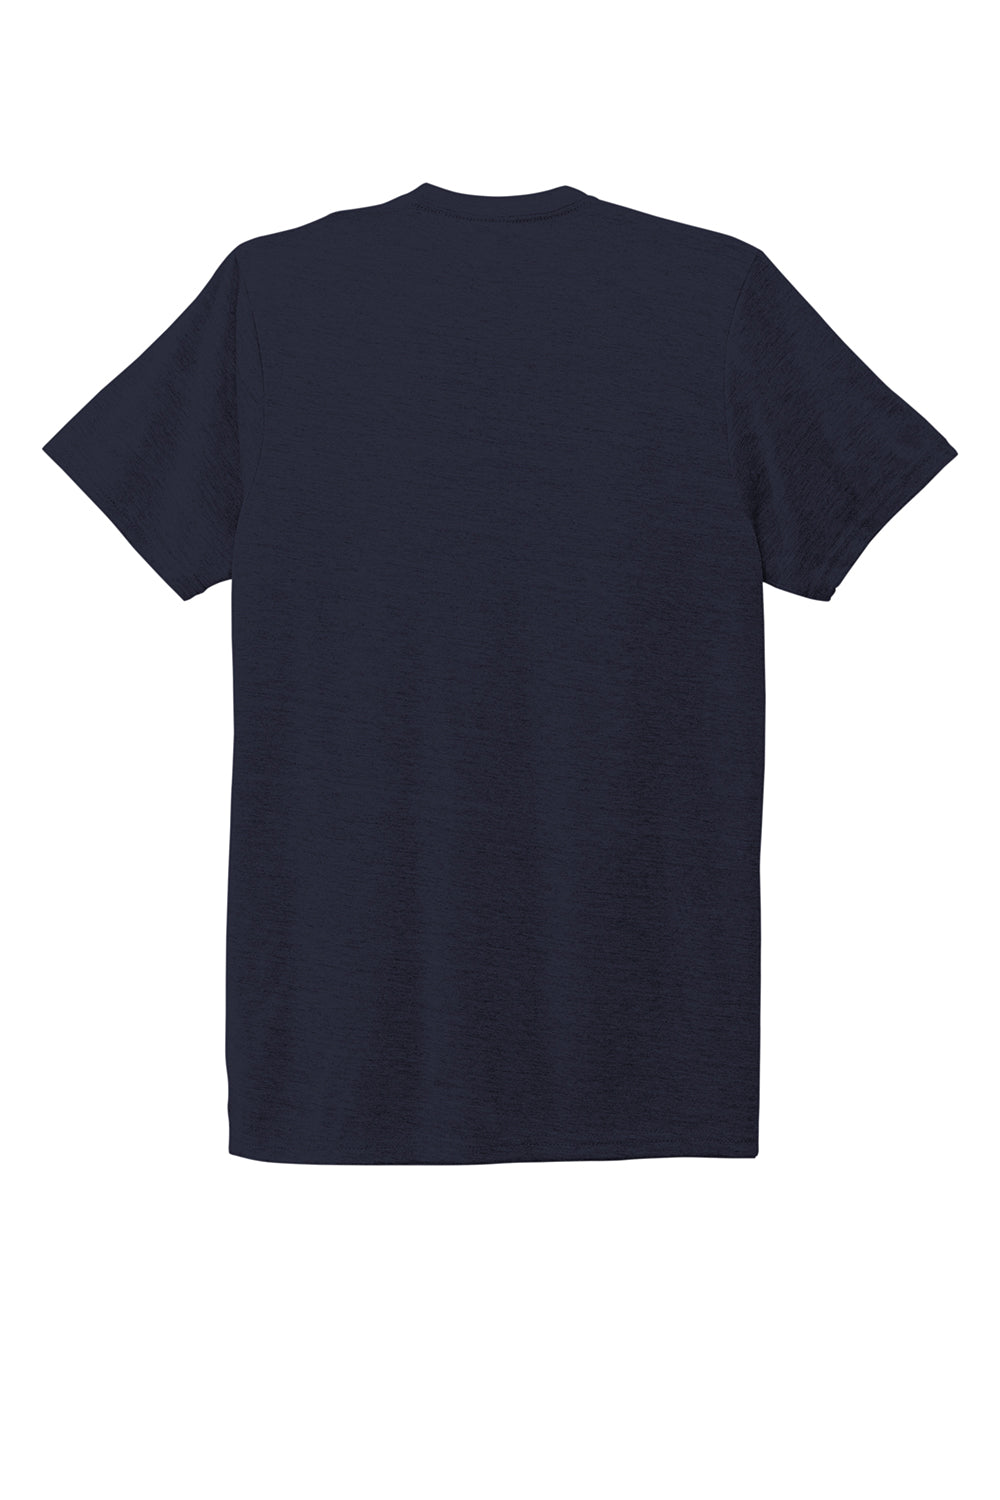 Allmade AL2004 Mens Short Sleeve Crewneck T-Shirt Night Sky Navy Blue Flat Back